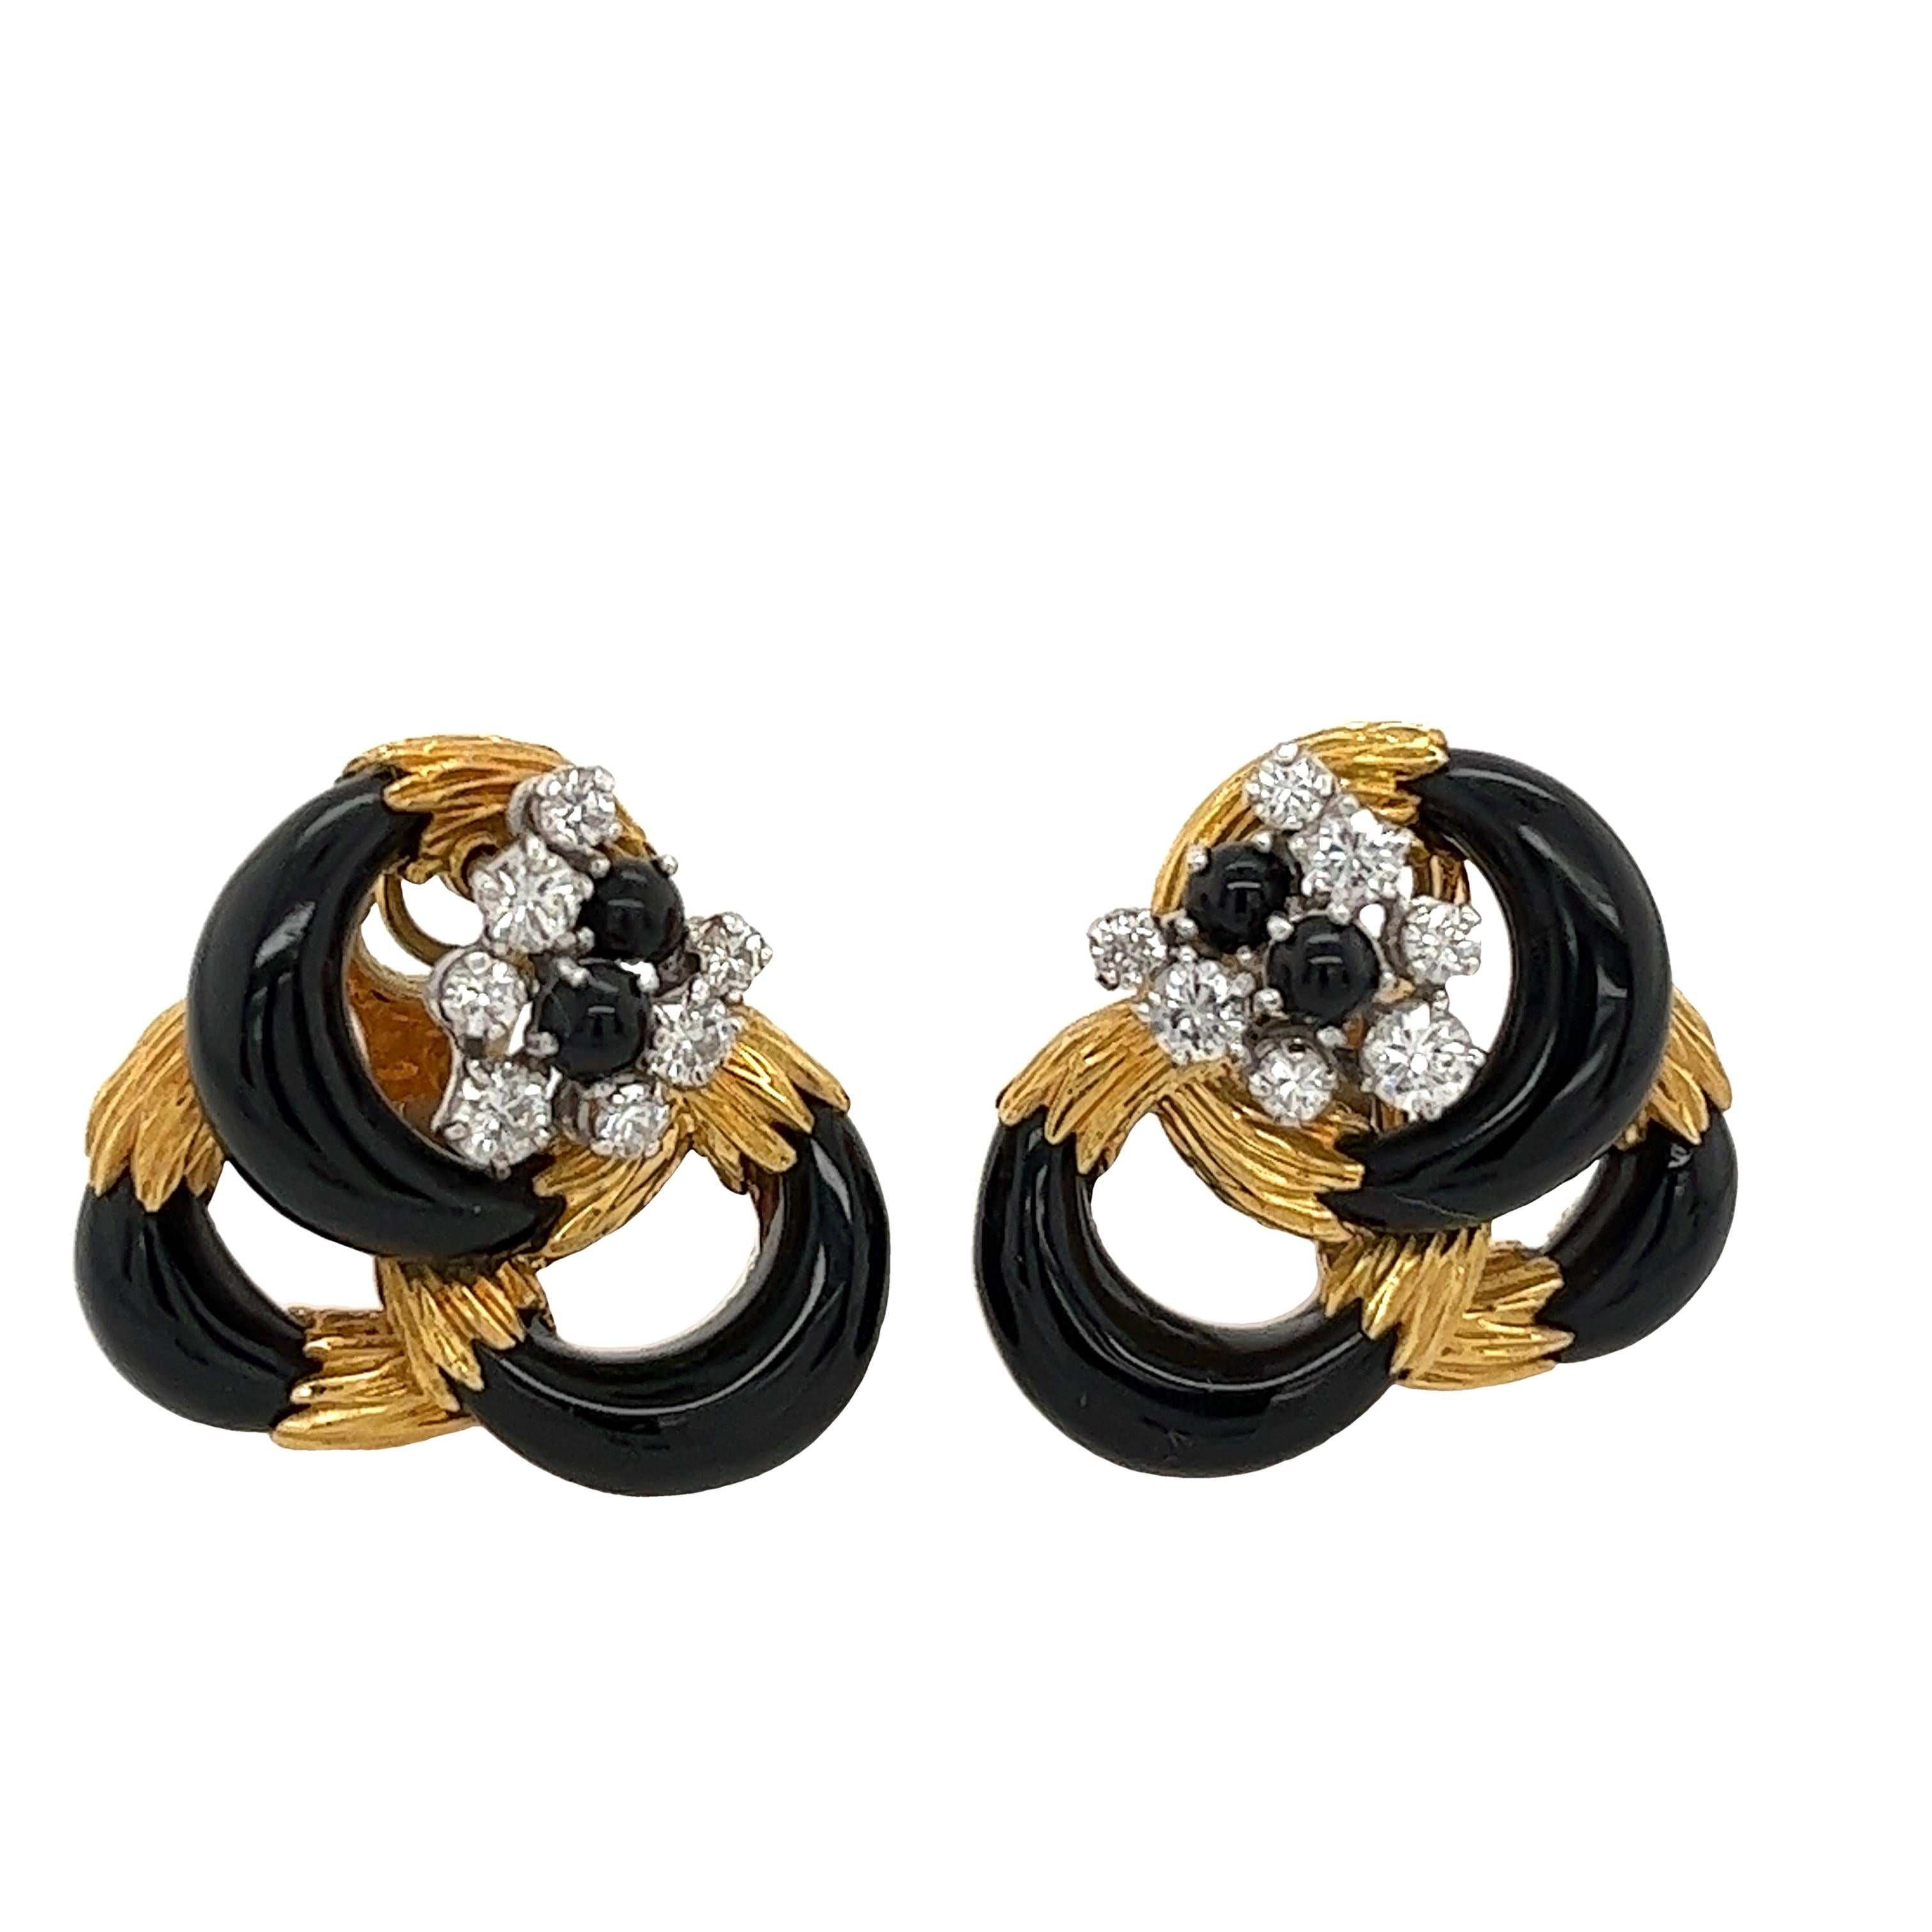 Kutchinsky Vintage Diamond Earrings Black Enamel Set In 18ct Yellow Gold 5